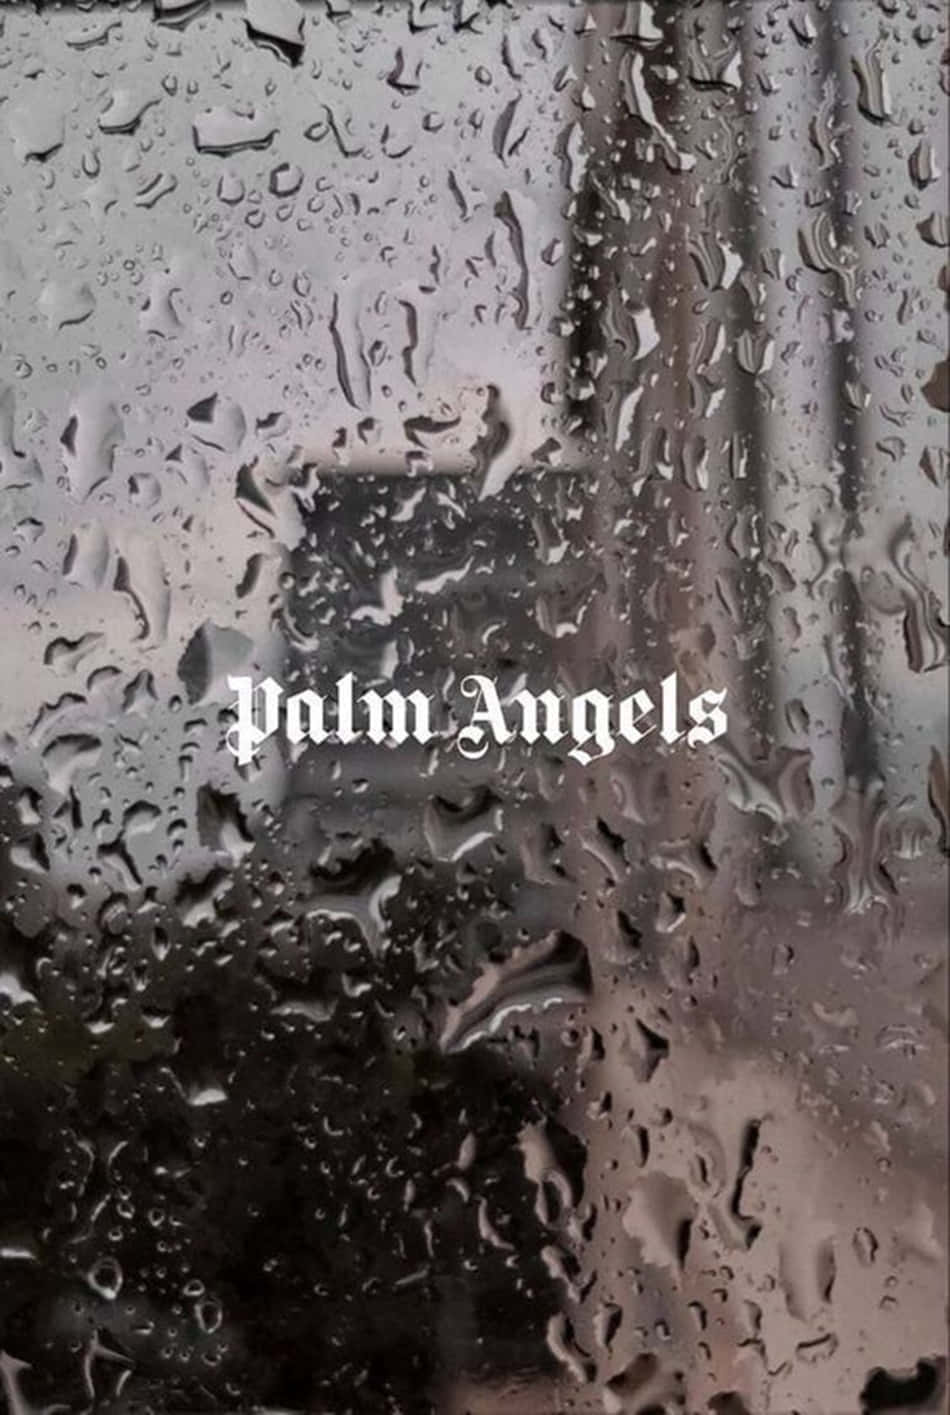 Palm Angels - Raindrops Cover Art Wallpaper